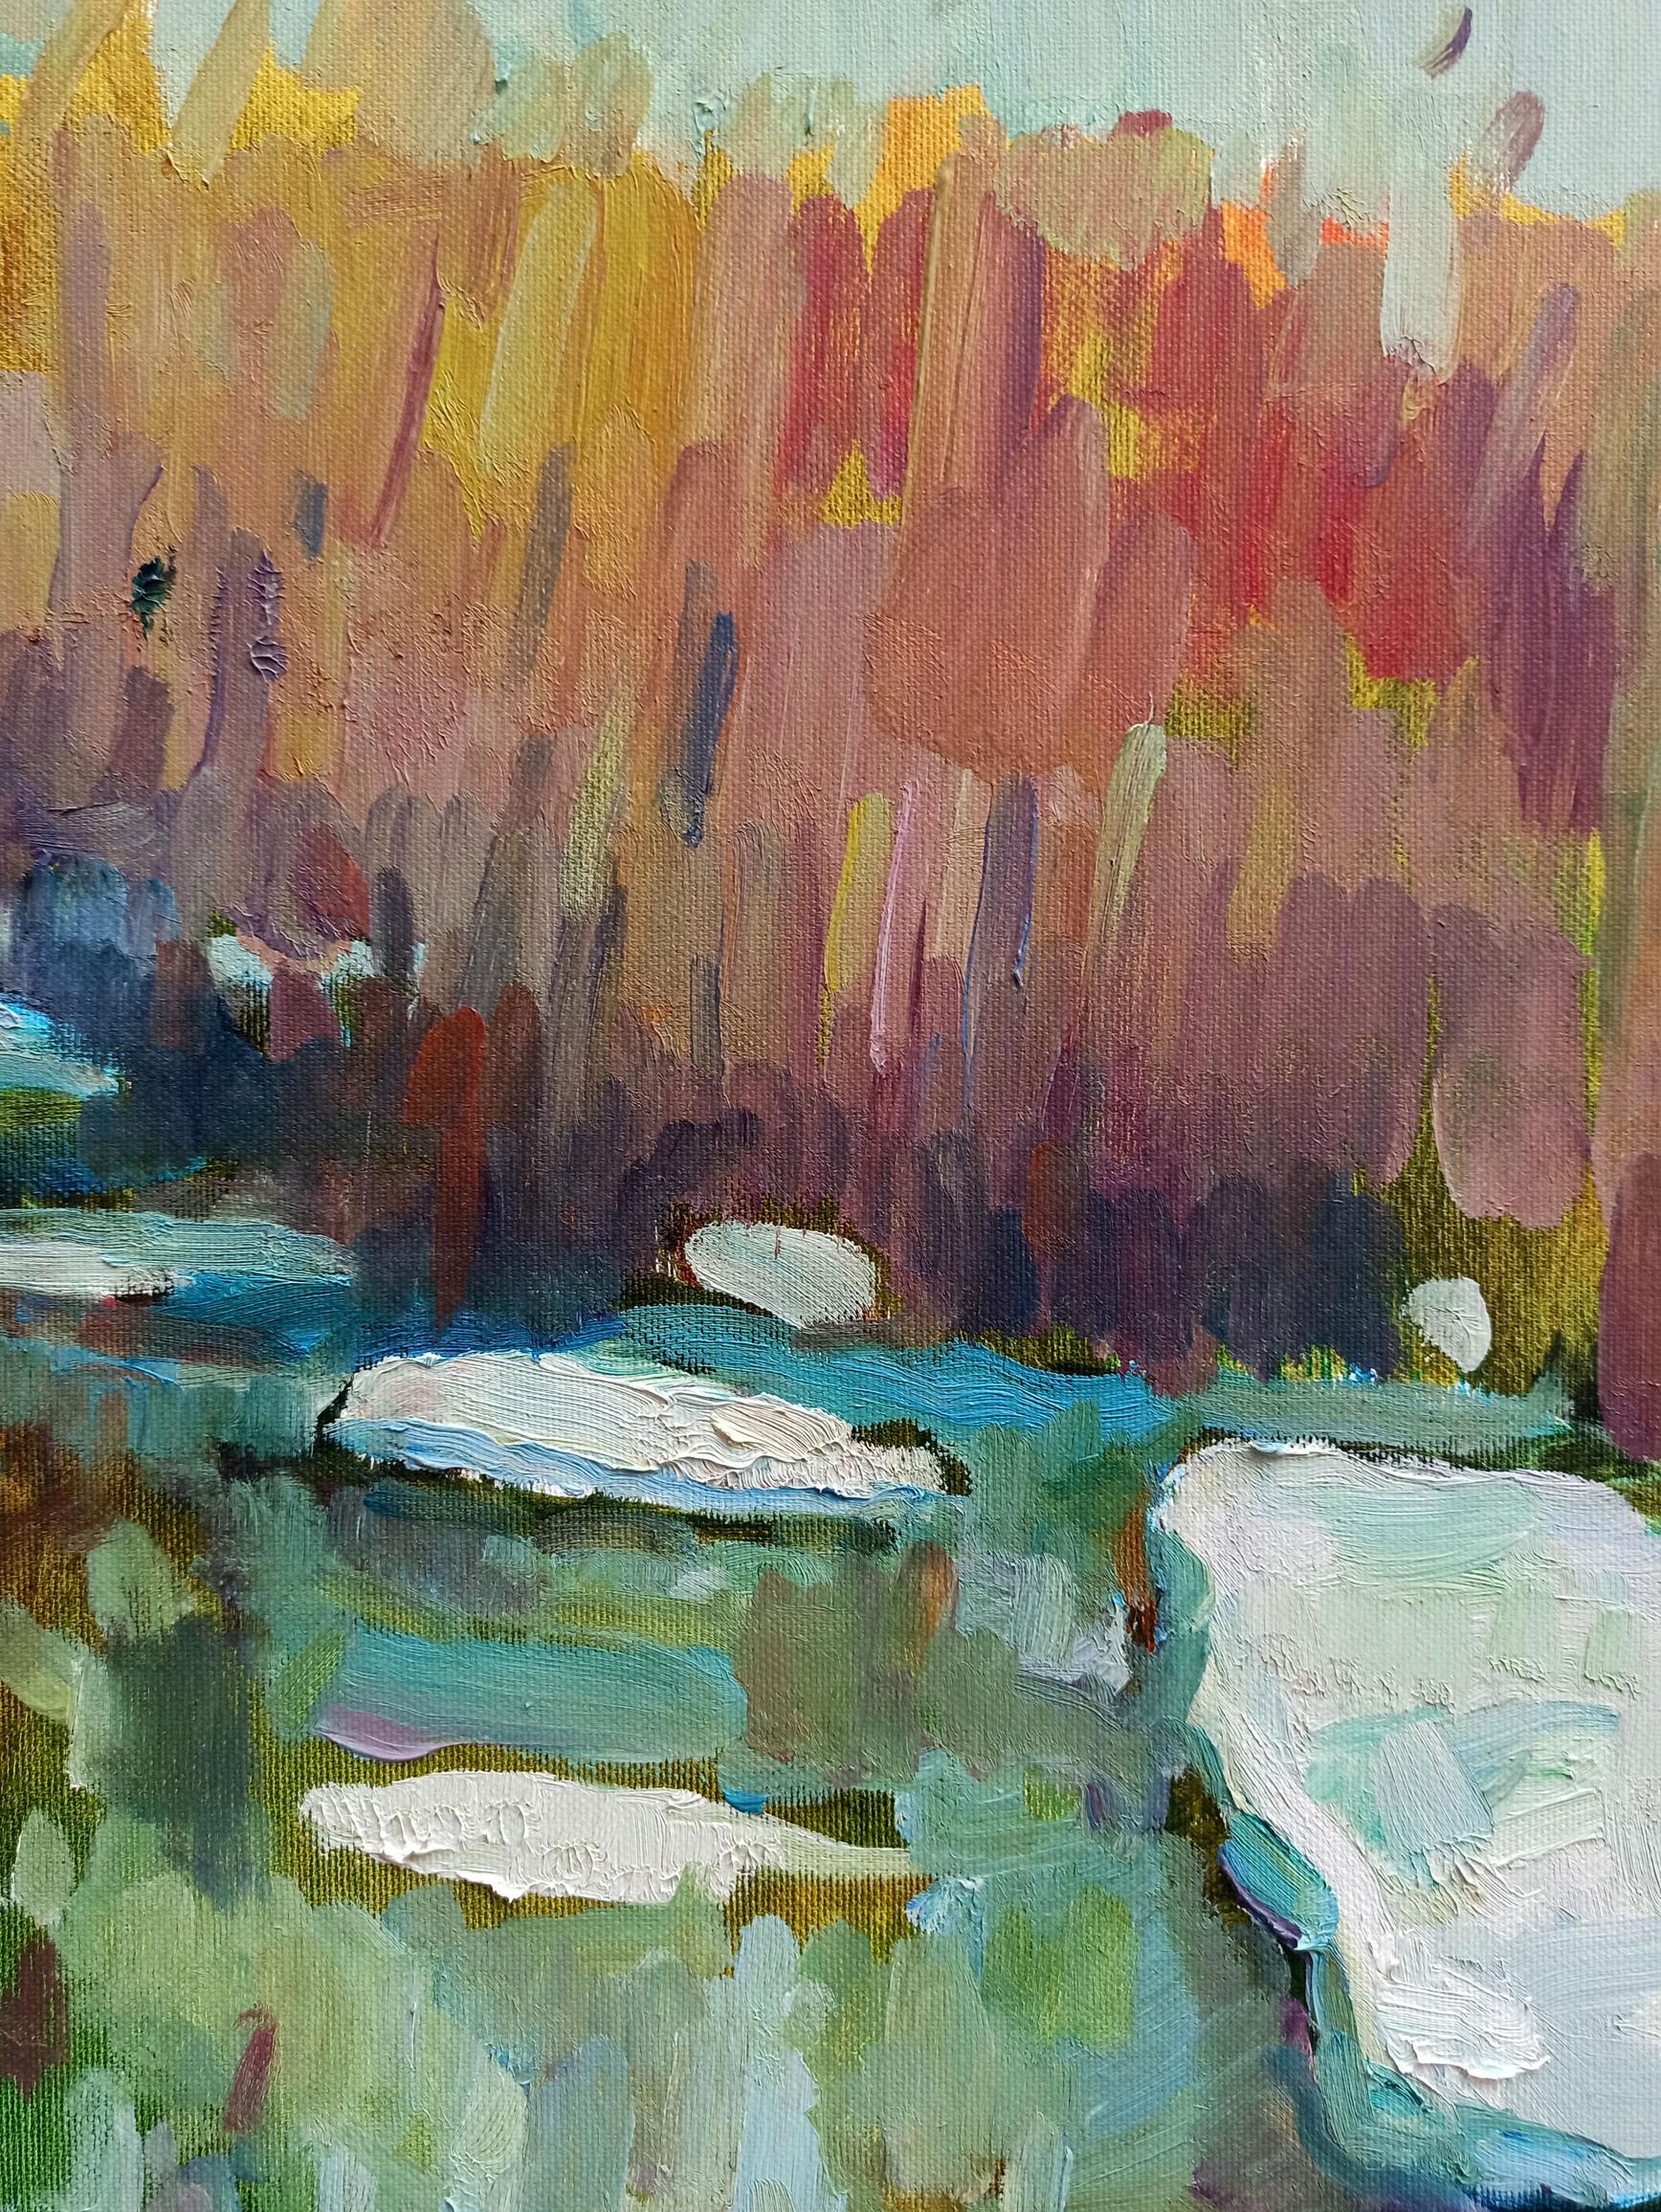 Peter Dobrev's oil painting portrays the awakening of nature in springtime